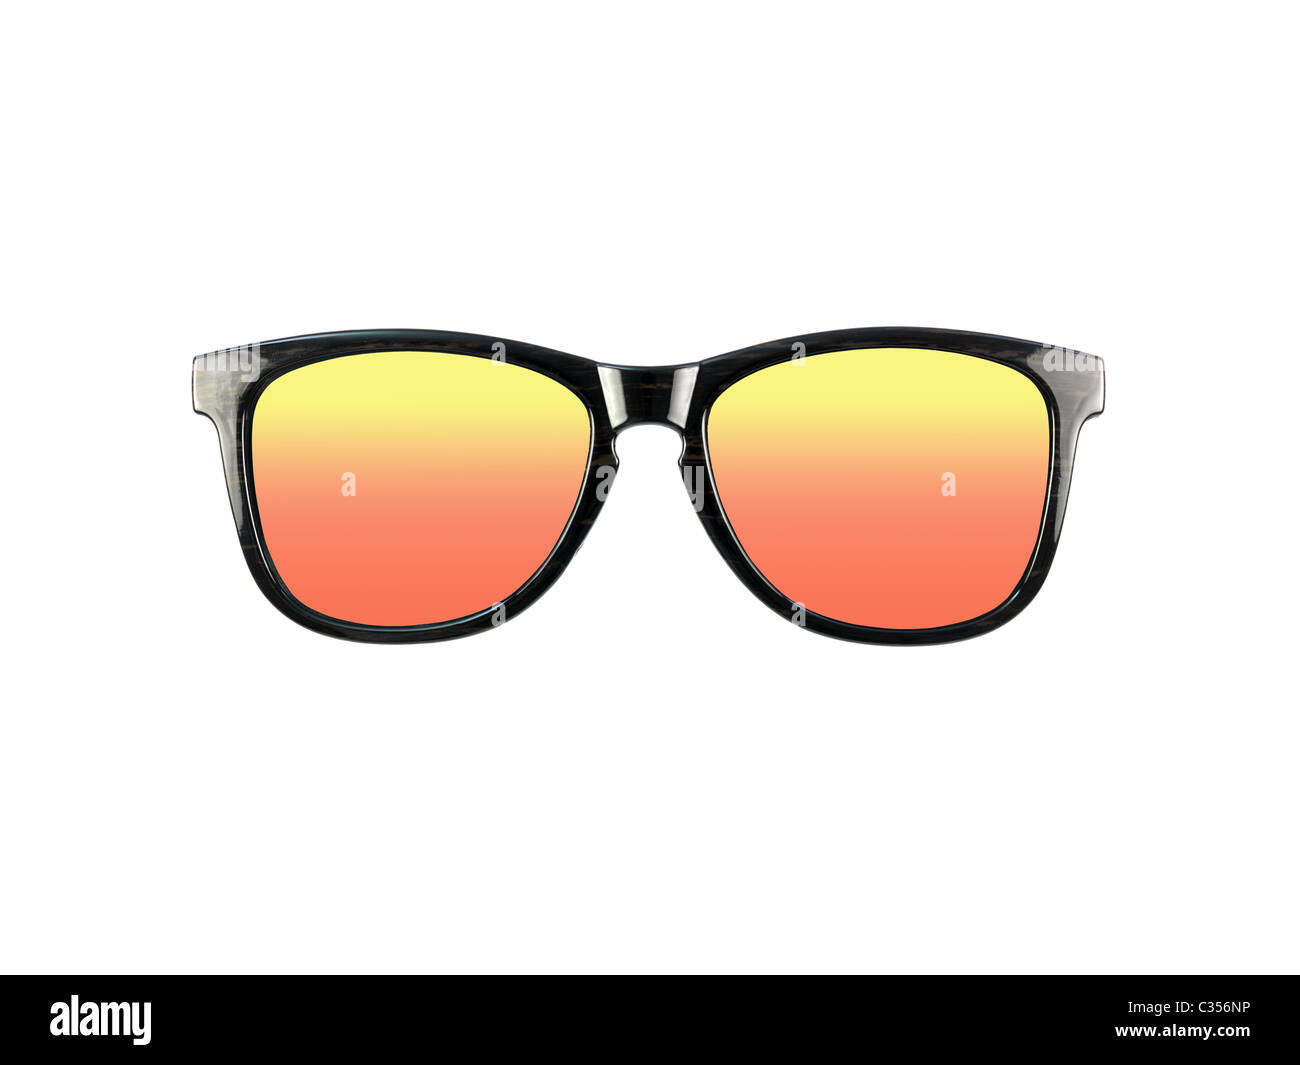 Saydy New Men's Polarized Sunglasses Color Film Polarized Sunglasses Sunglasses Sunglasses Driving Glasses